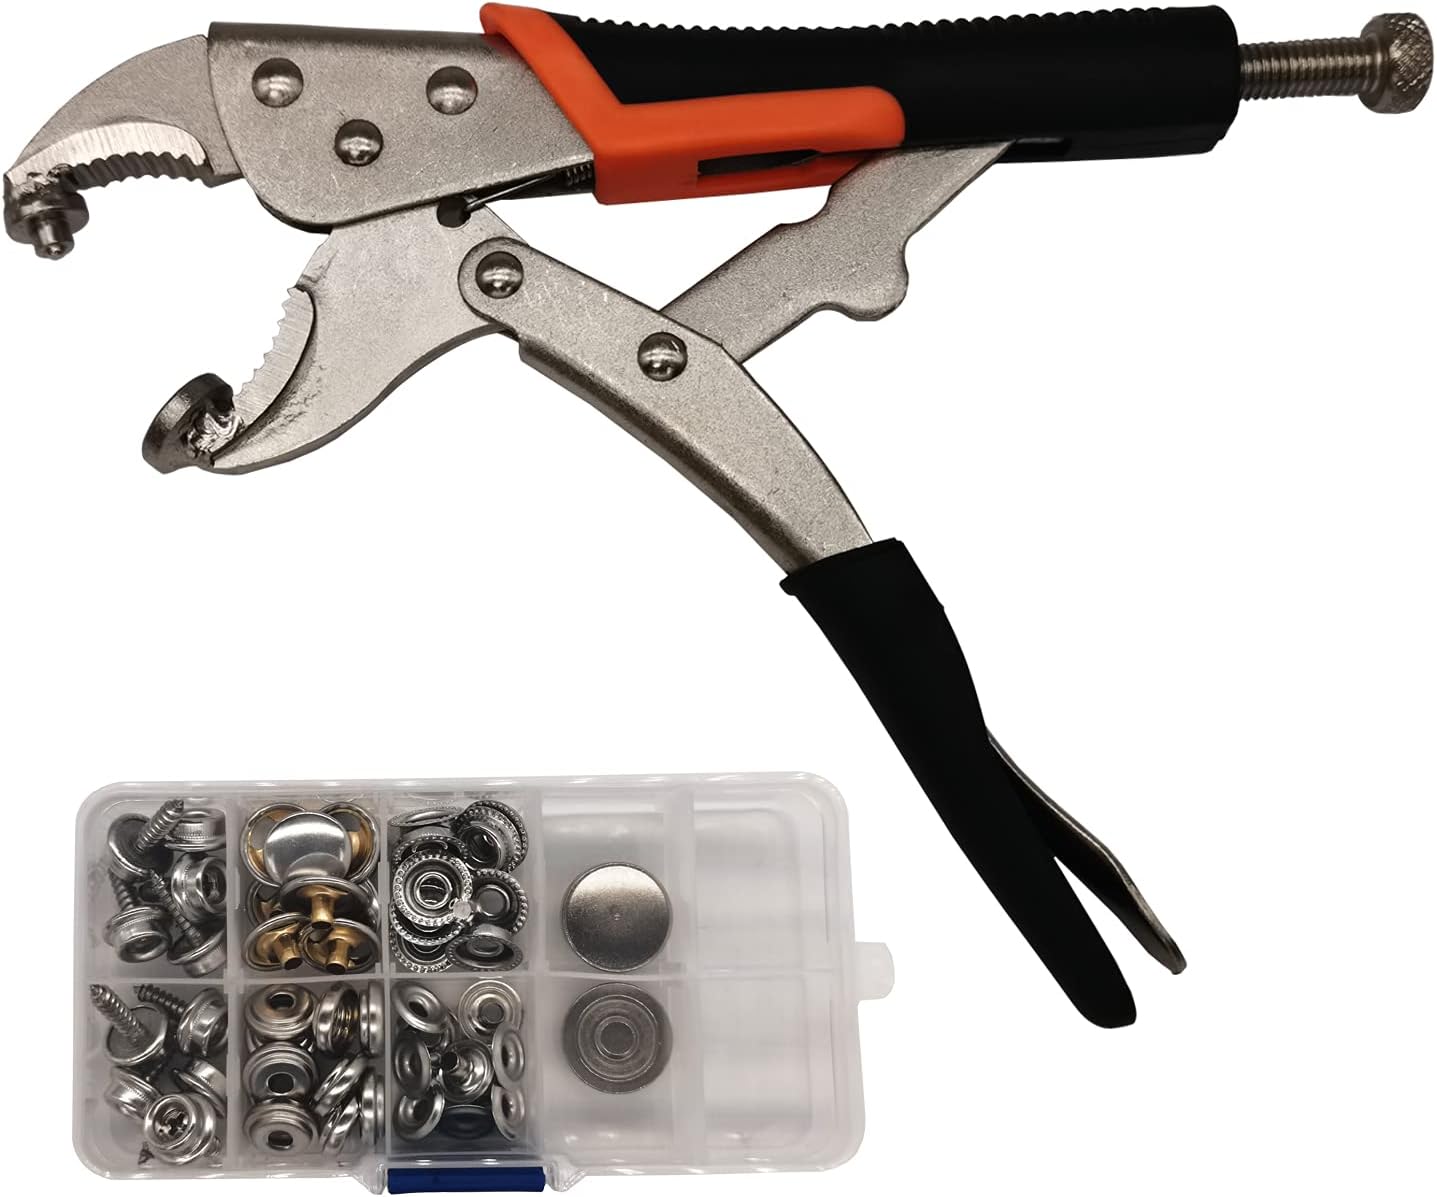 DaiDai Heavy-Duty Snap Setter Fastener Pliers Snap Tool Kit Vice-Grip Tool for Fastening Metal Snap Rings Replacing Metal Snaps Repair